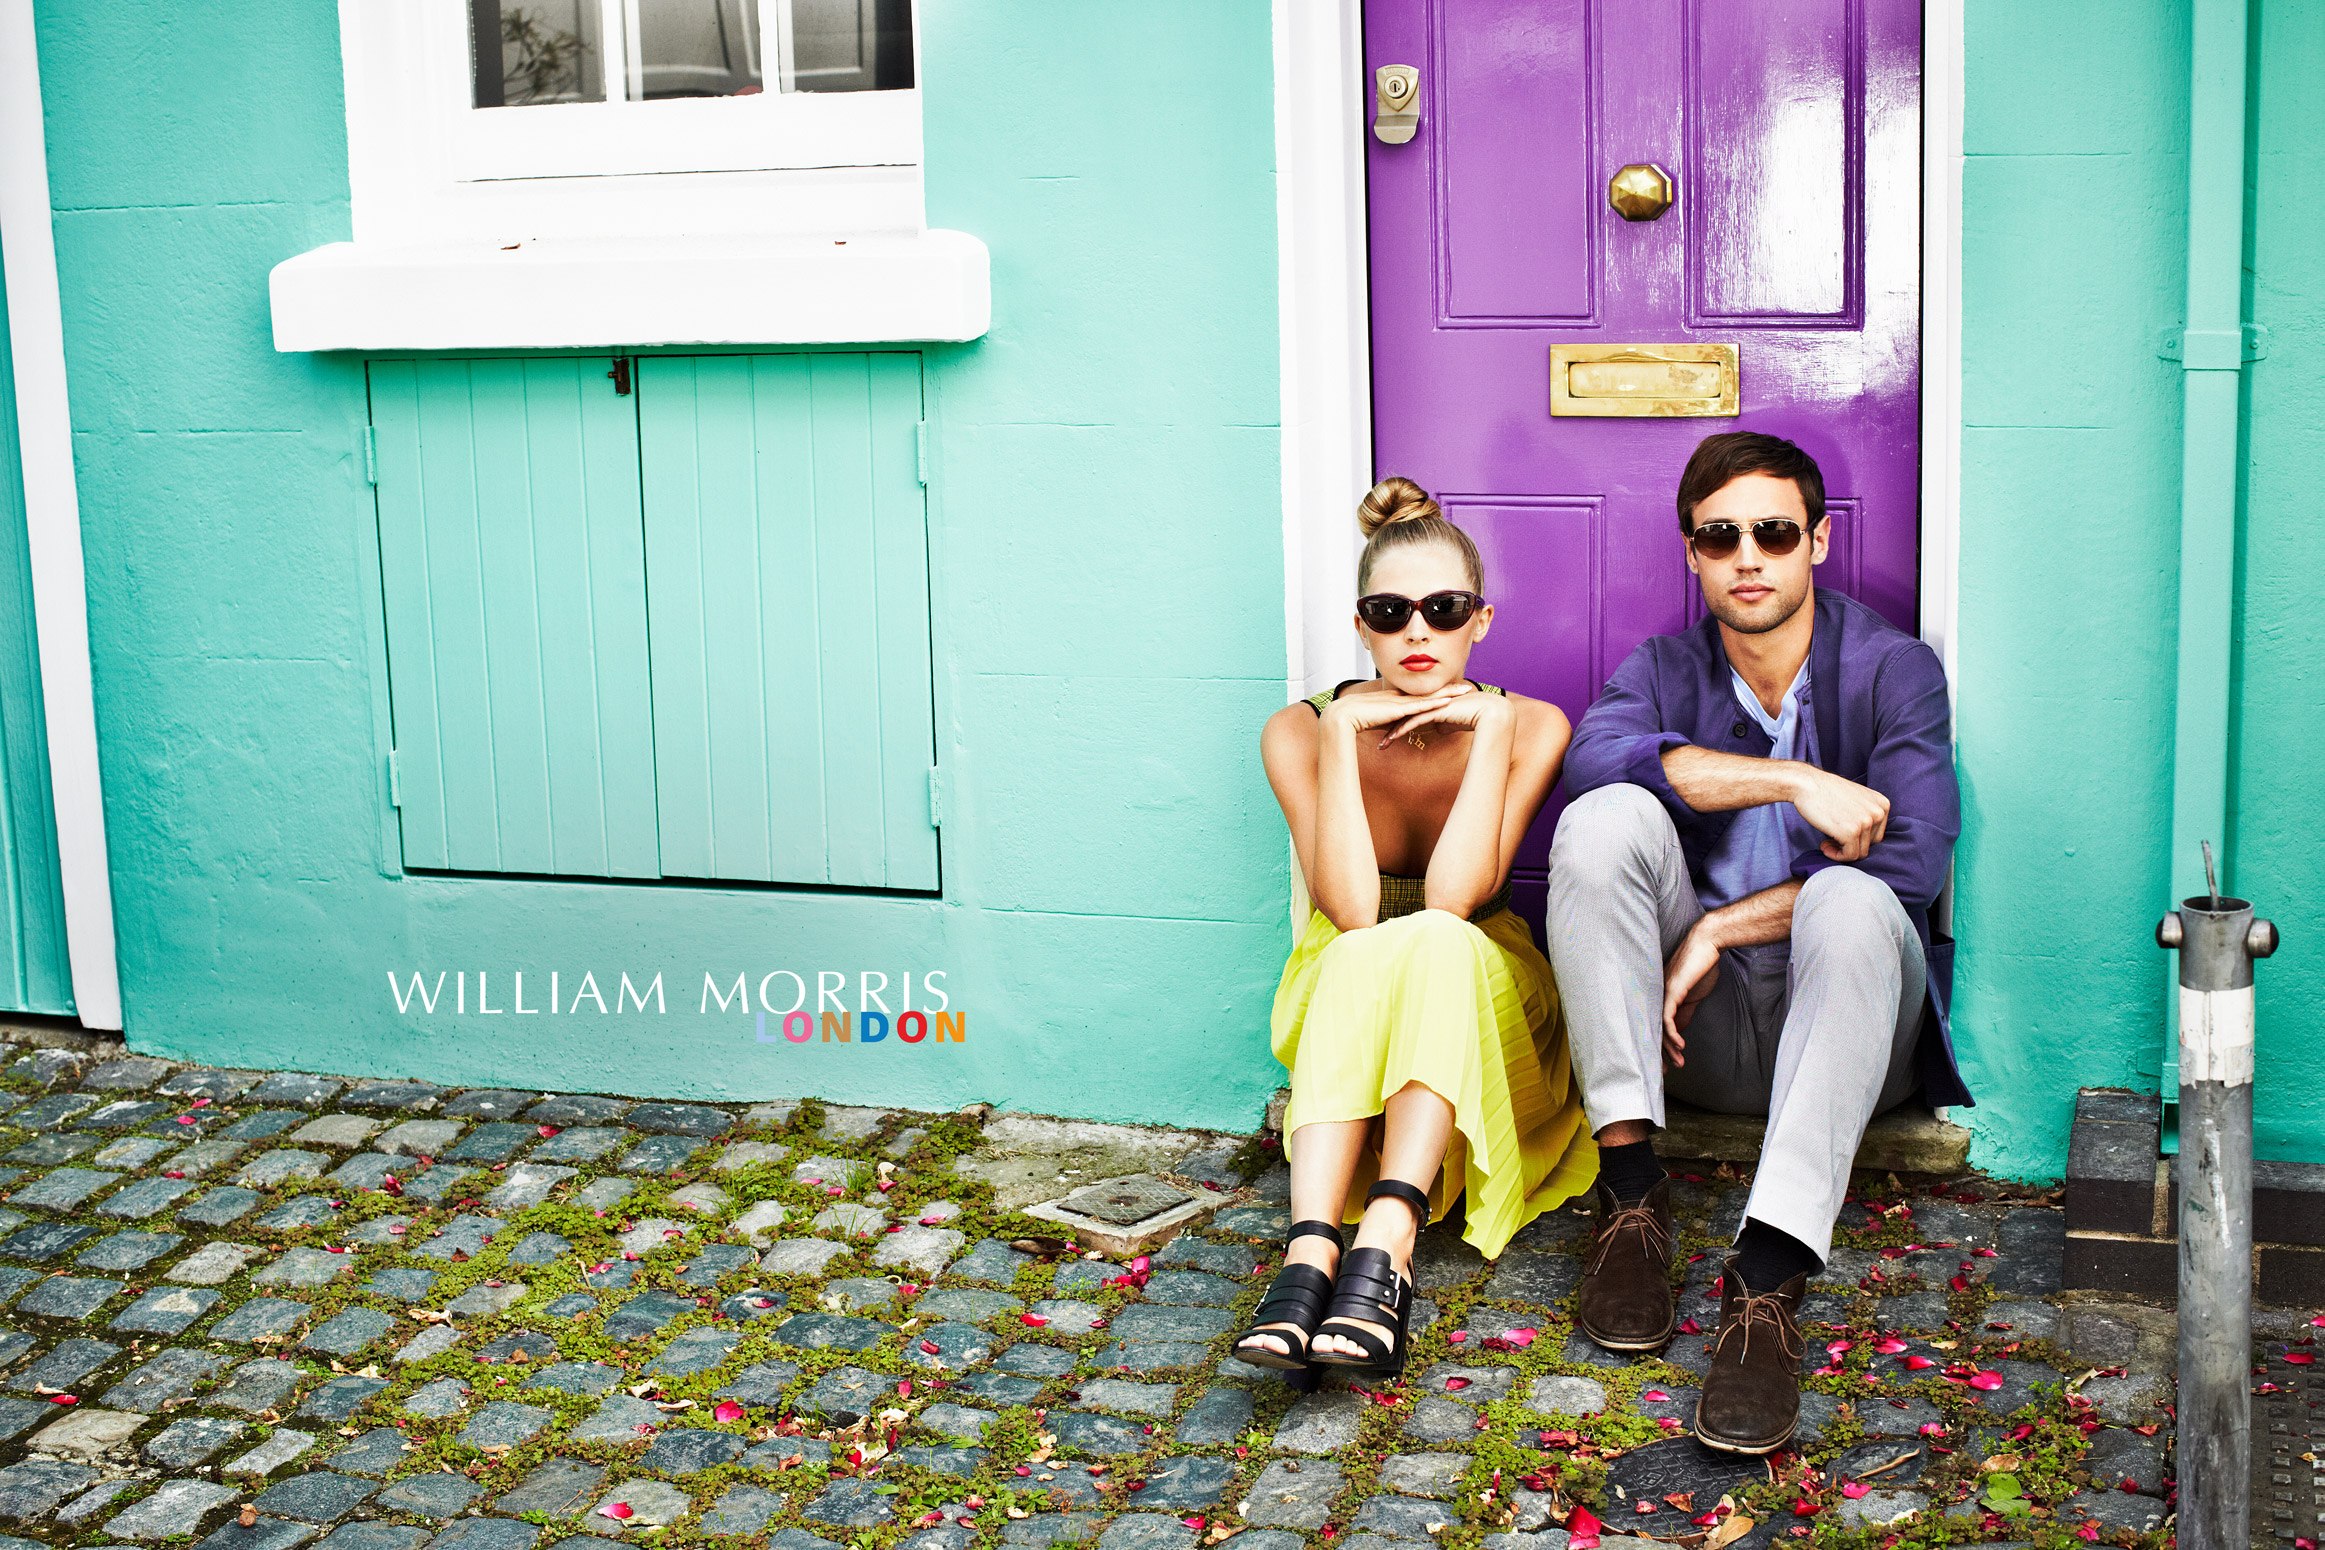 william-morris-ruth-rose-fashion-glasses-accessories-london-hermione-corfield-london-tourist-notting-hill-chelsea-fashion-boy-girl-colour-house-5